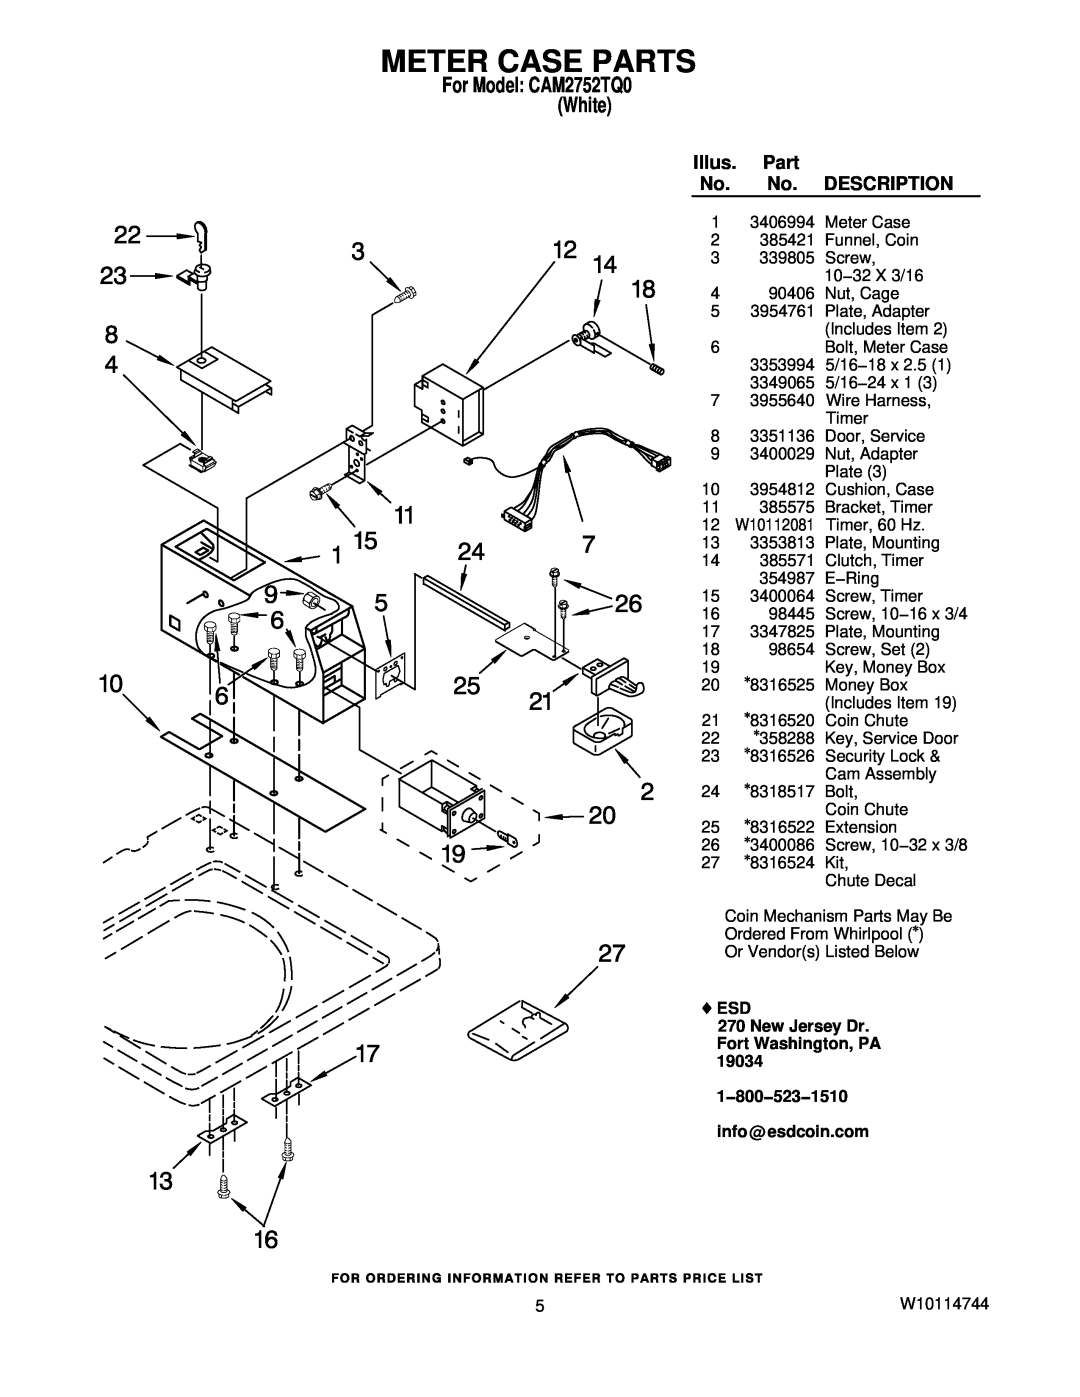 Whirlpool CAM2752TQ0 Meter Case Parts, Illus, Description, ESD 270 New Jersey Dr Fort Washington, PA 19034 1−800−523−1510 